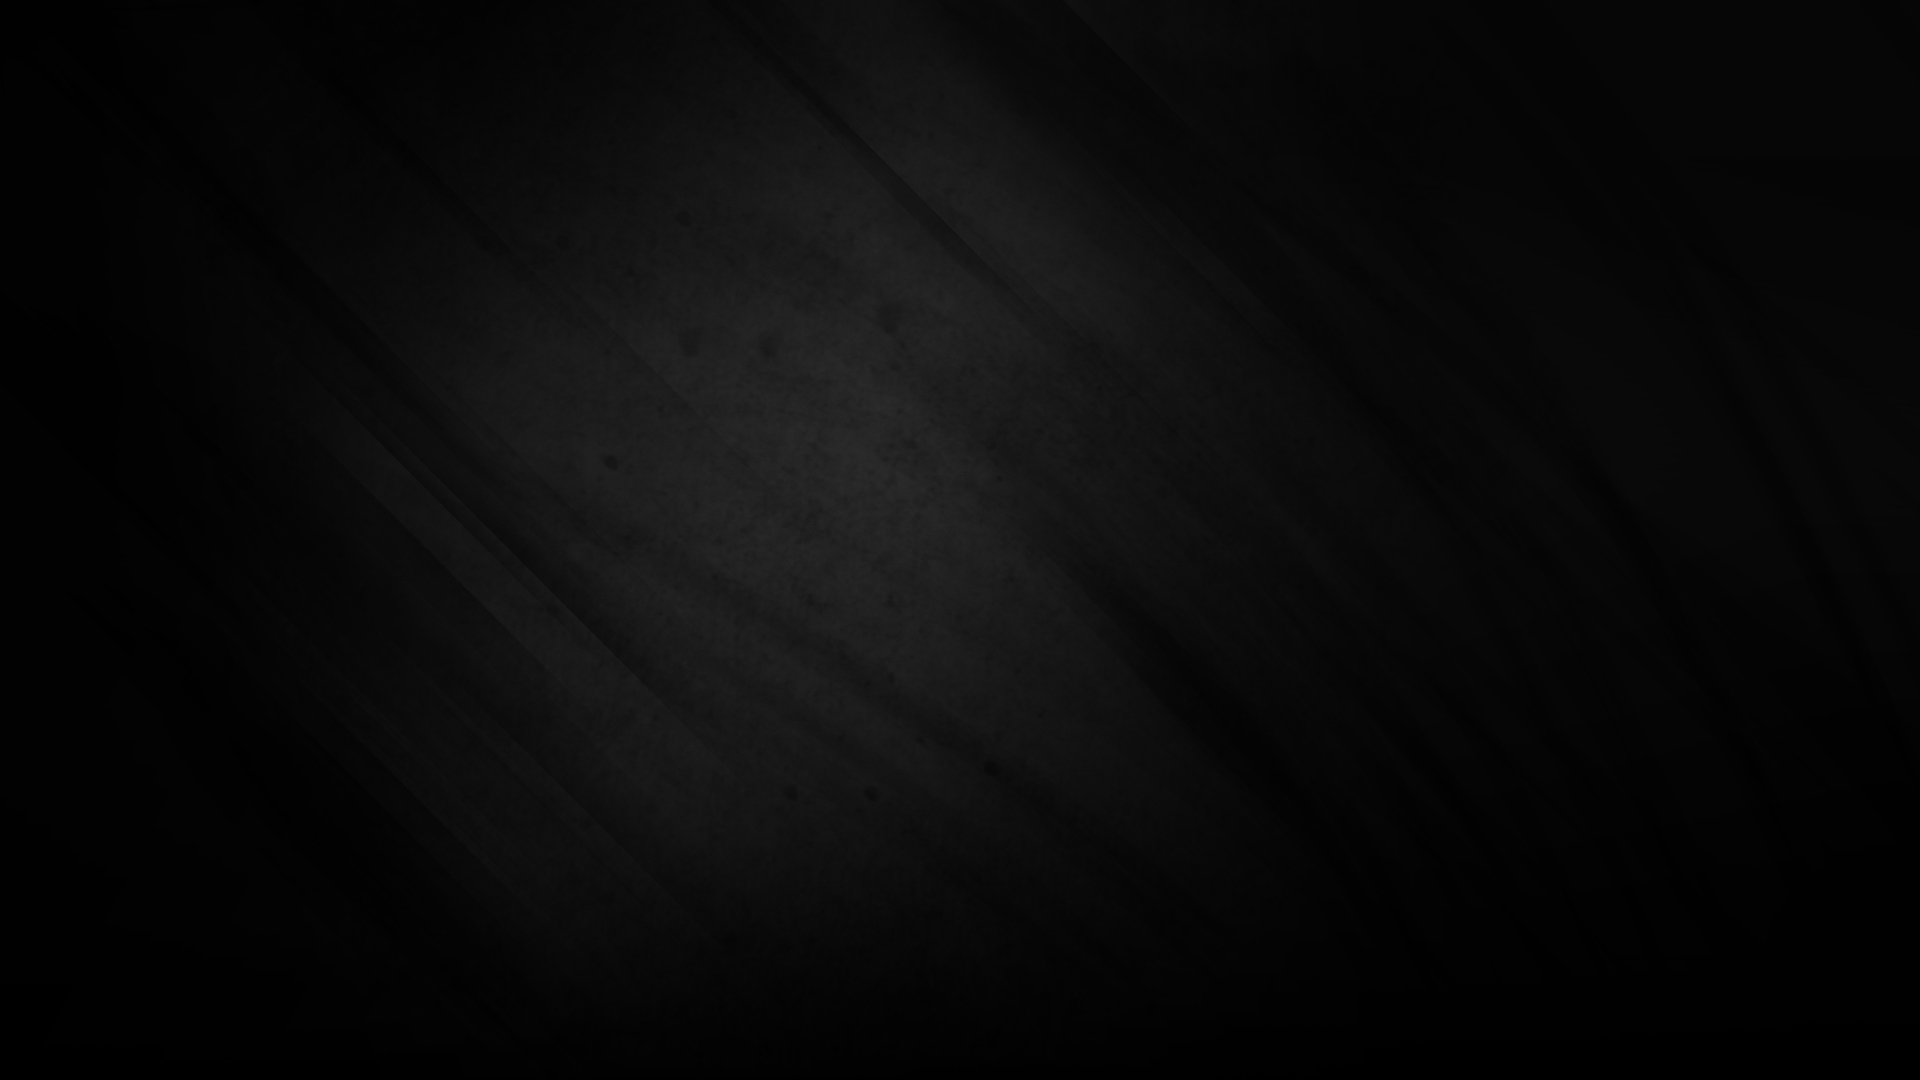 Featured image of post 1080P Black Background 1080P Black Mobile Wallpaper Hd - Download 4k wallpapers of black, dark, monochrome, black &amp; white, amoled wallpapers in hd, qhd, 4k, 5k resolutions for desktop &amp; mobile phones.